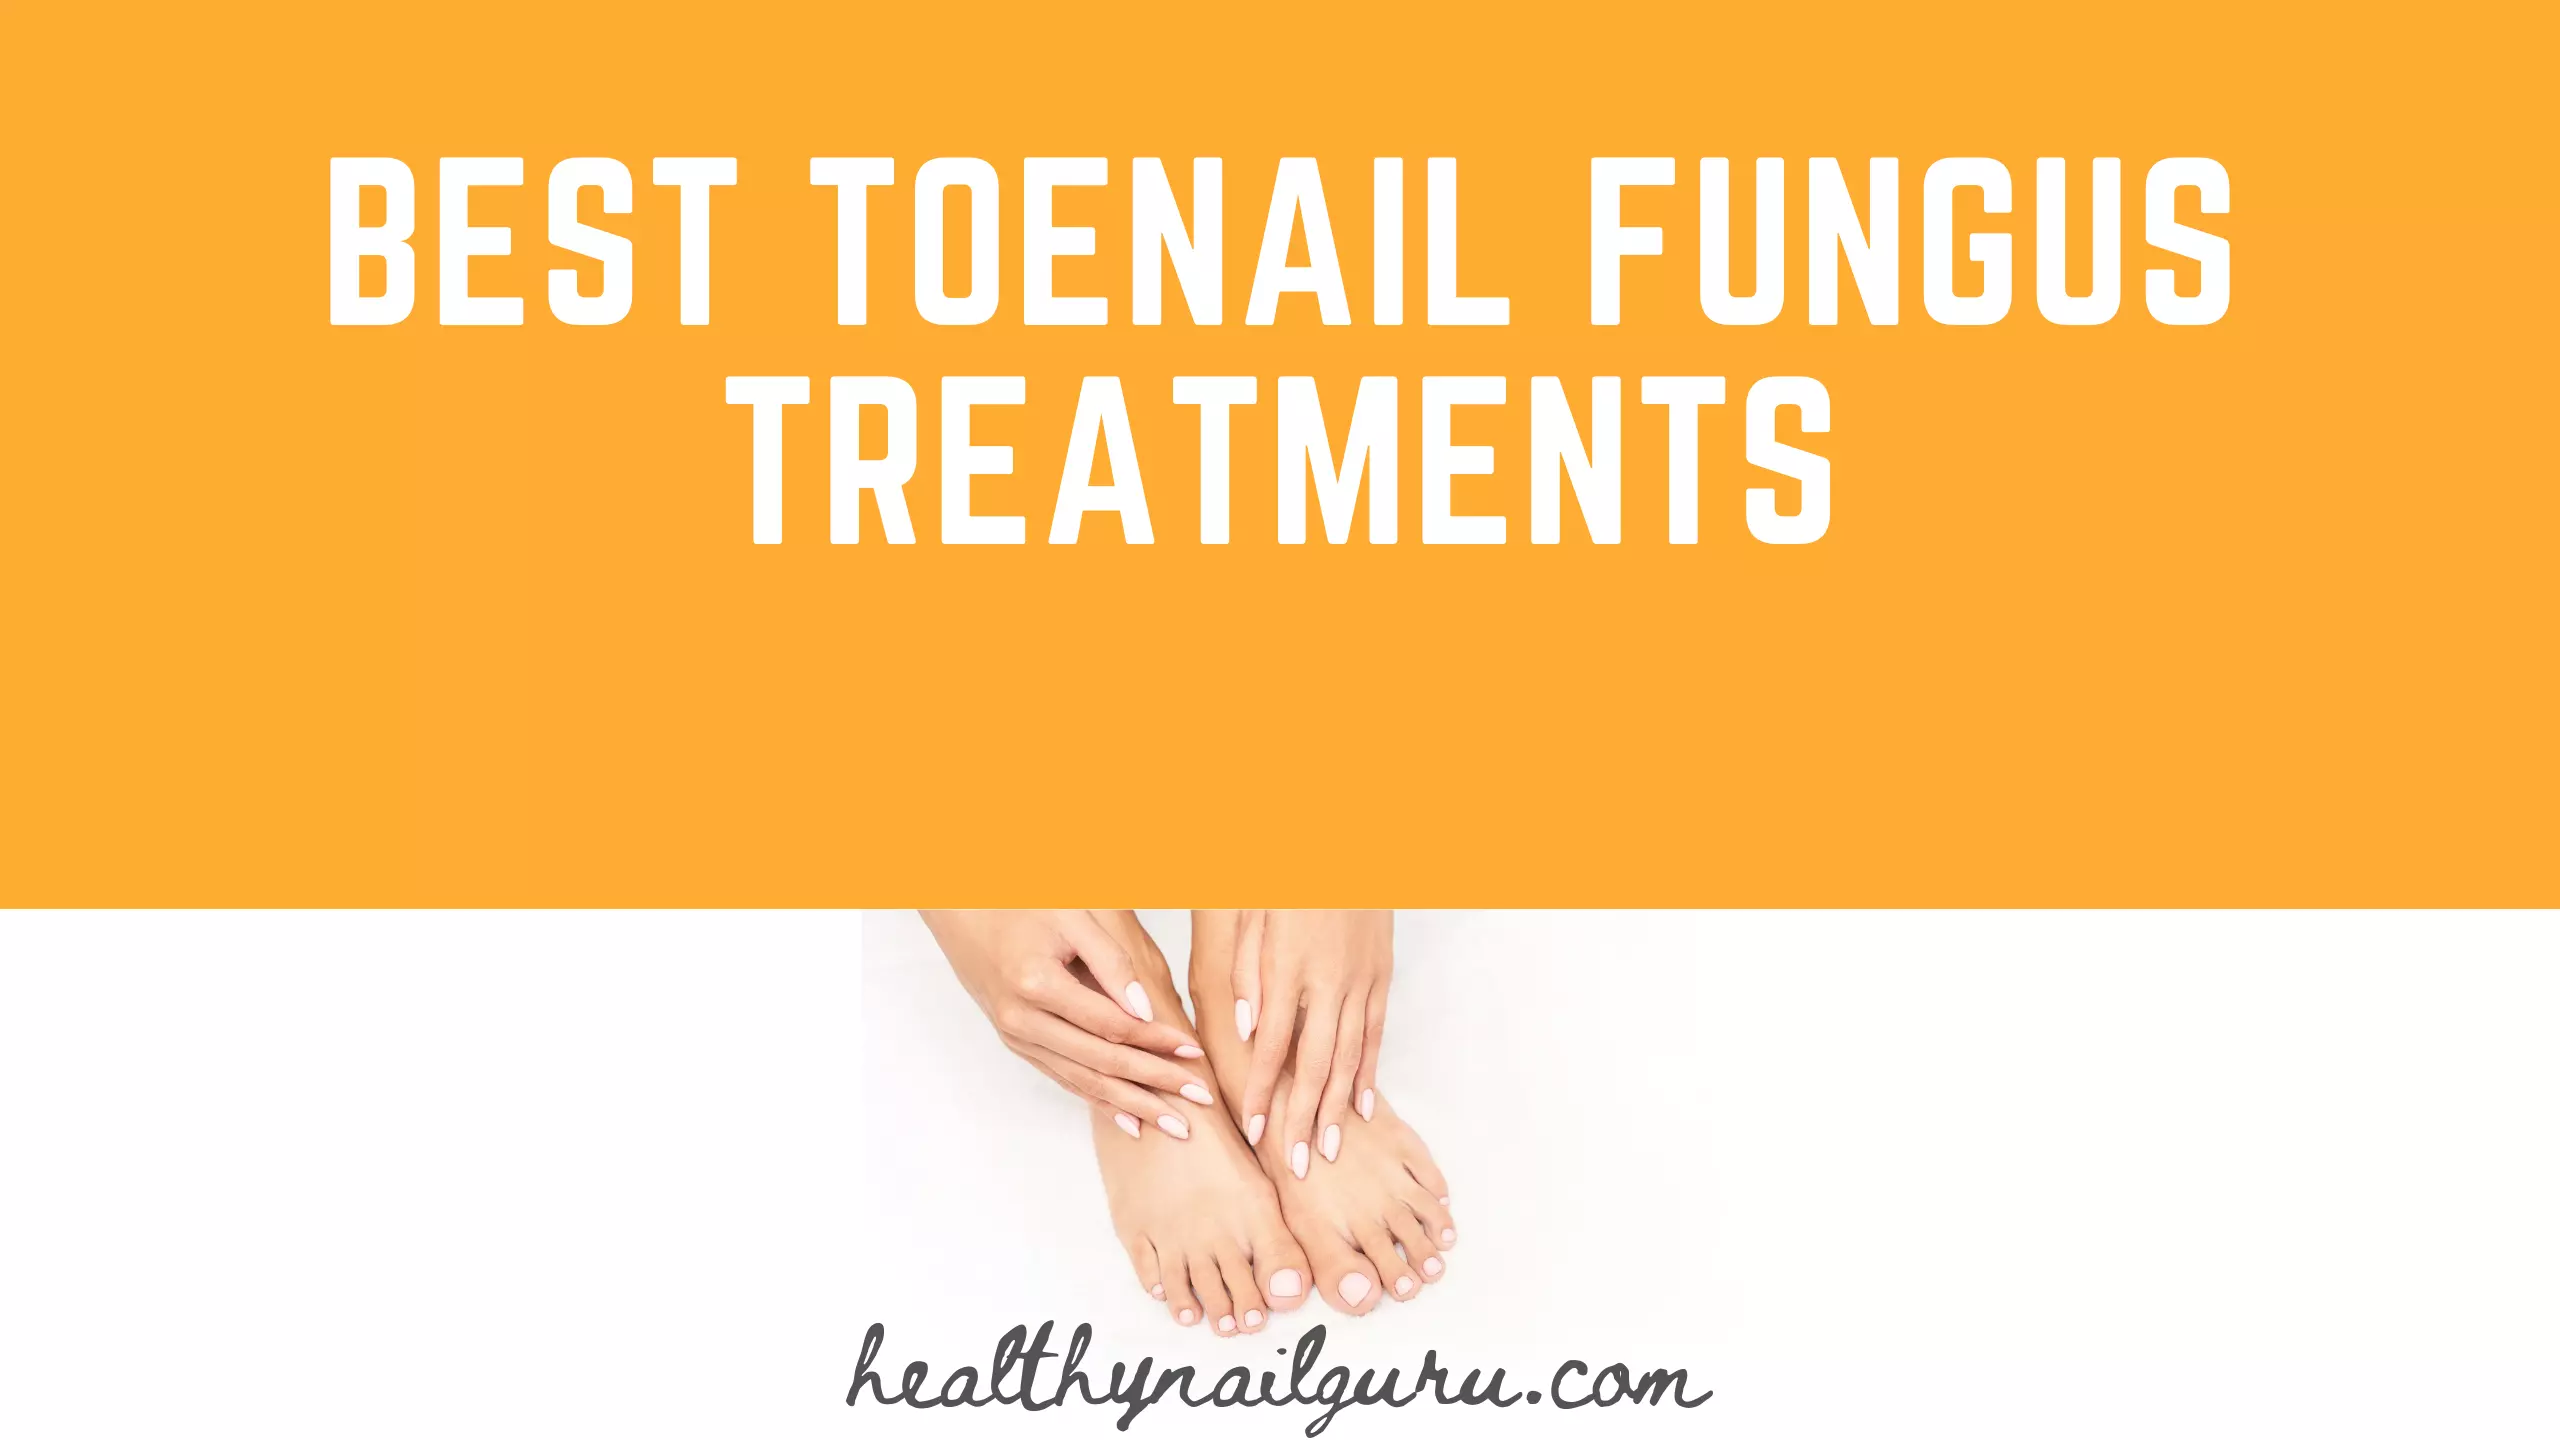 Best toenail fungus treatments 